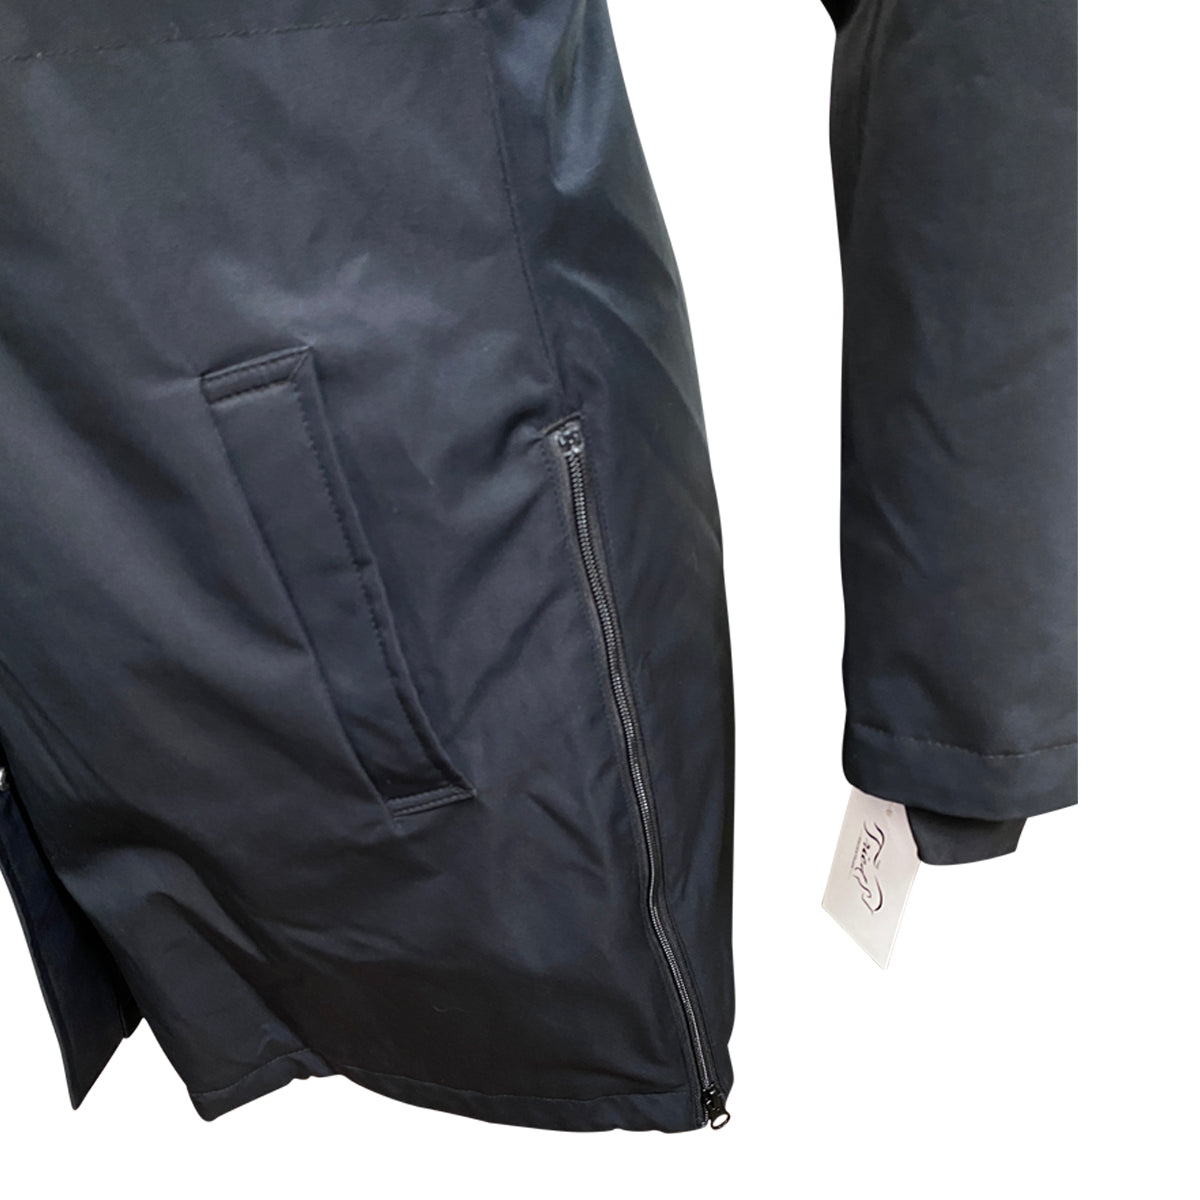 Dover Saddlery 'Cascade' Jacket in Black